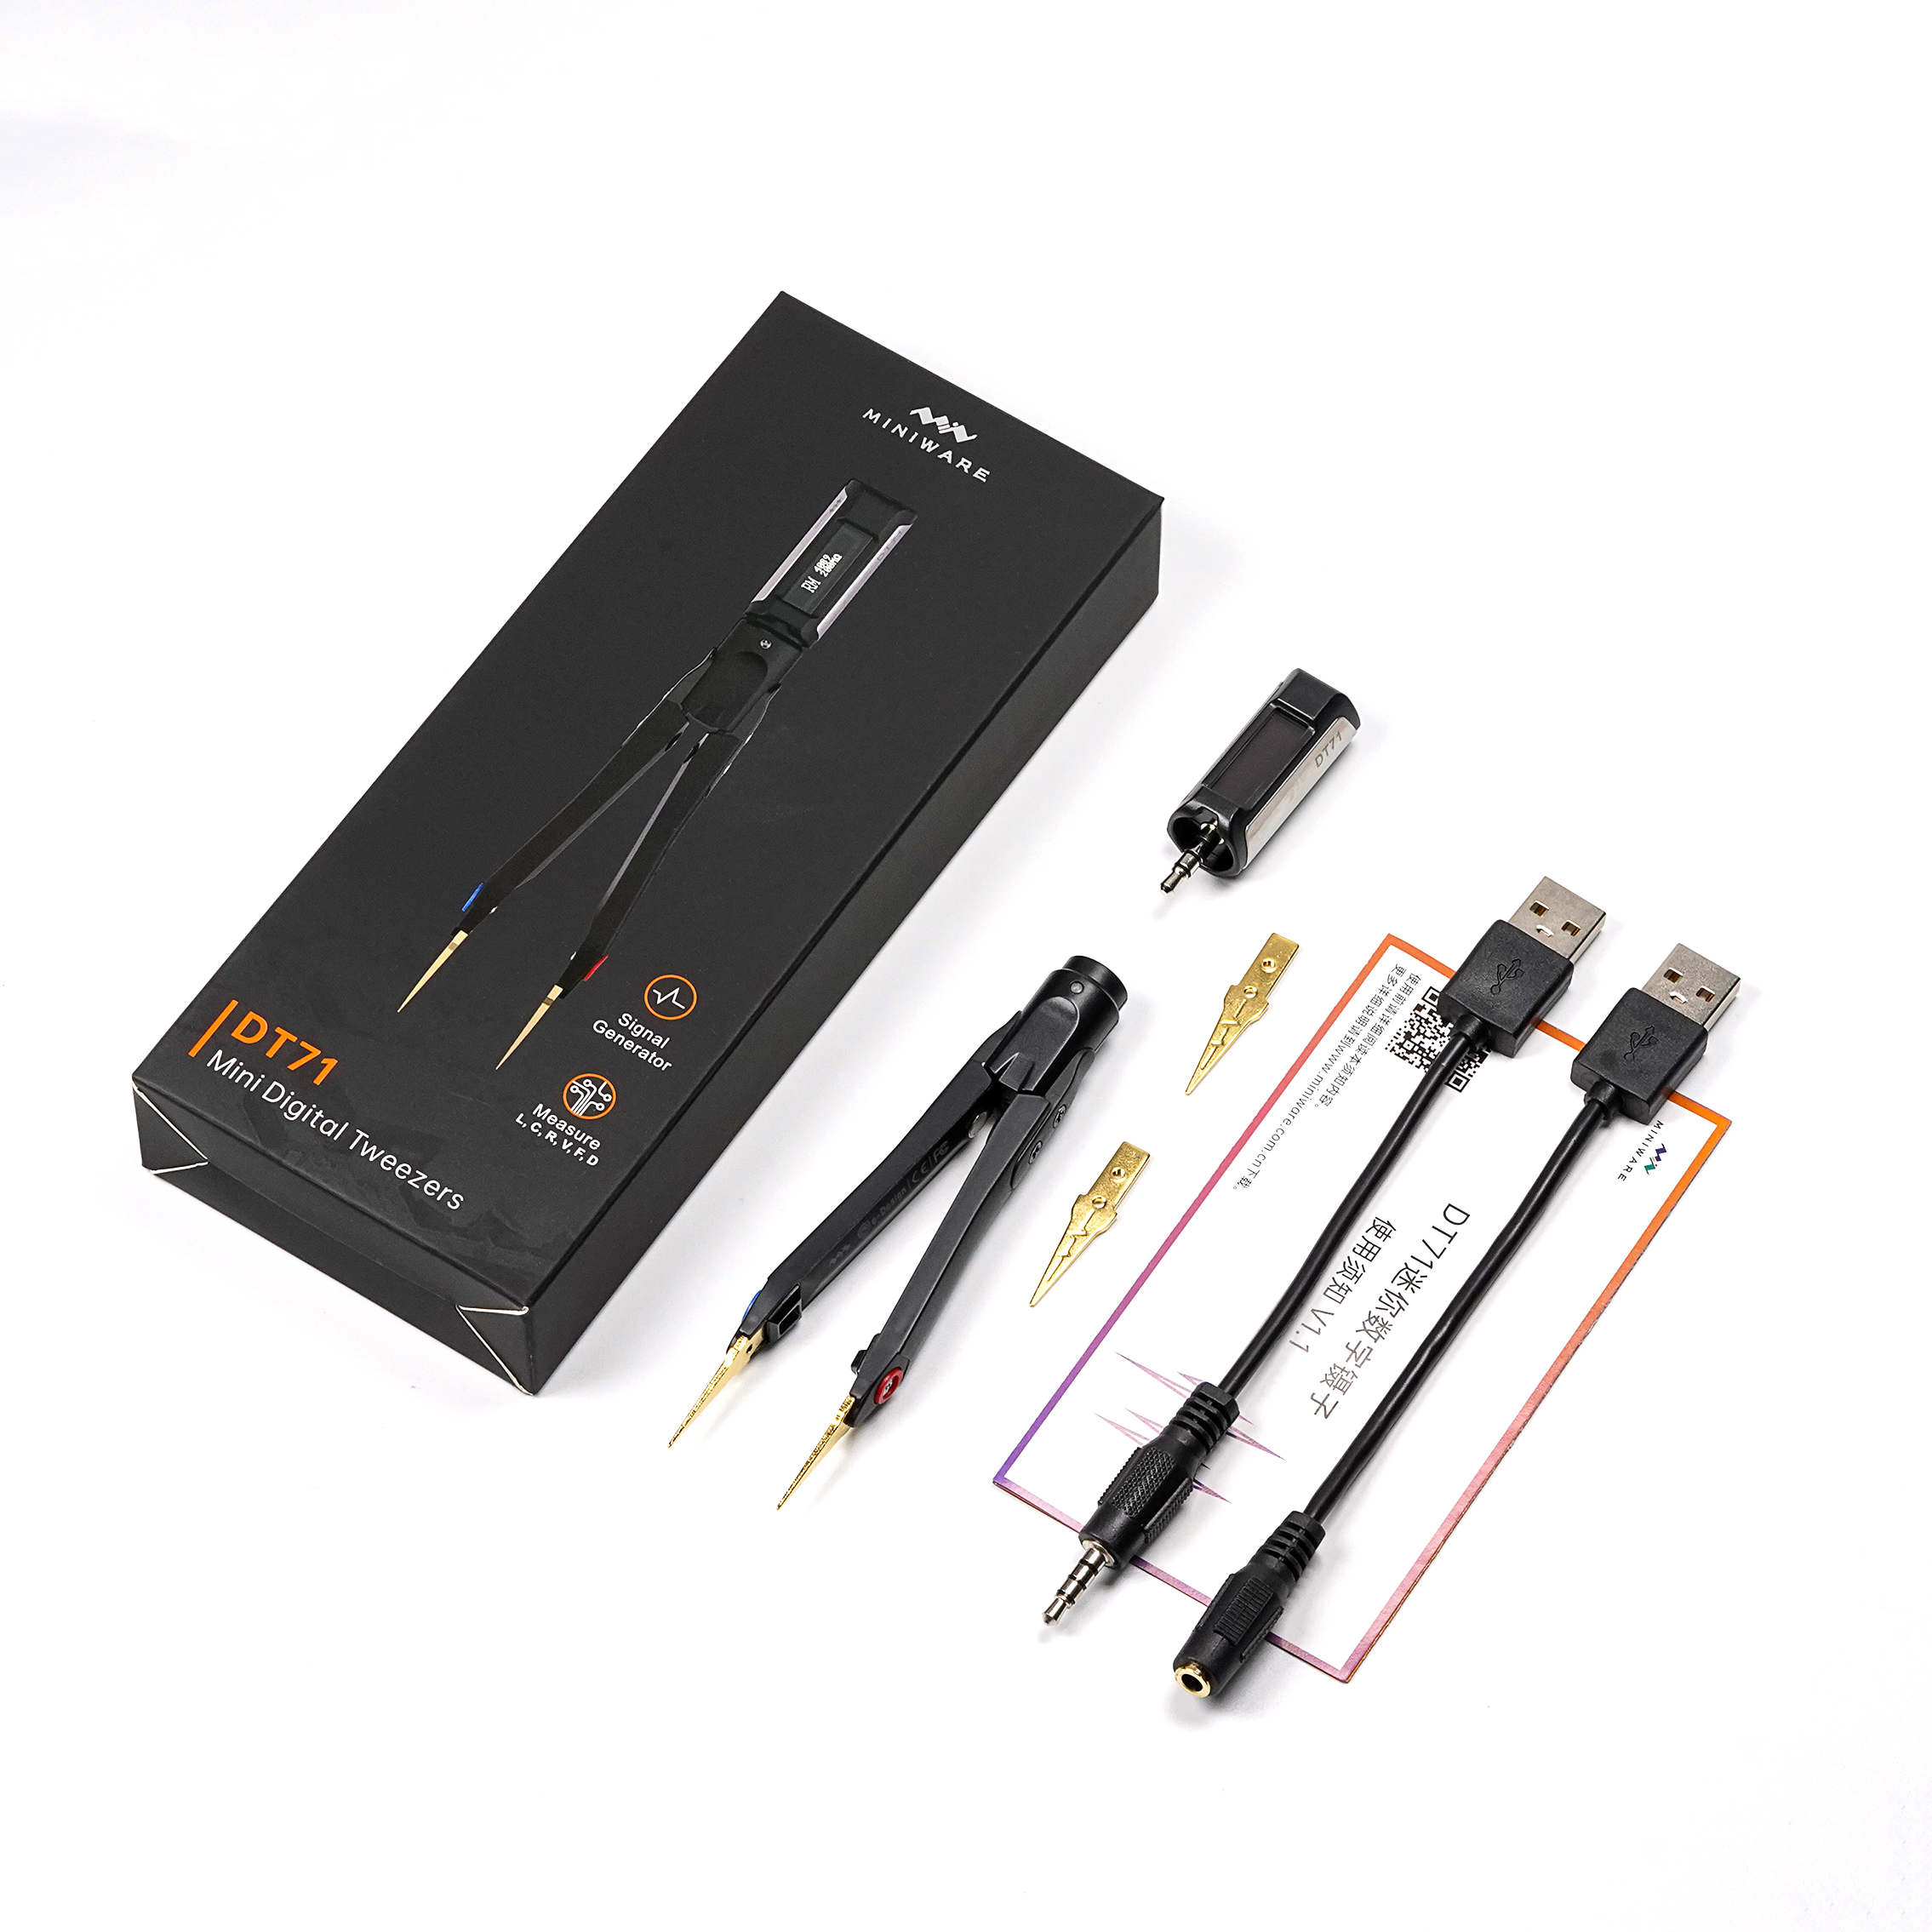 DT71-Digital-Mini-Tweezers-SMD-Tester-Portable-LCR-Meter-Diode-Resistor-Capacitor-Multimeter-Frequen-1856513-15